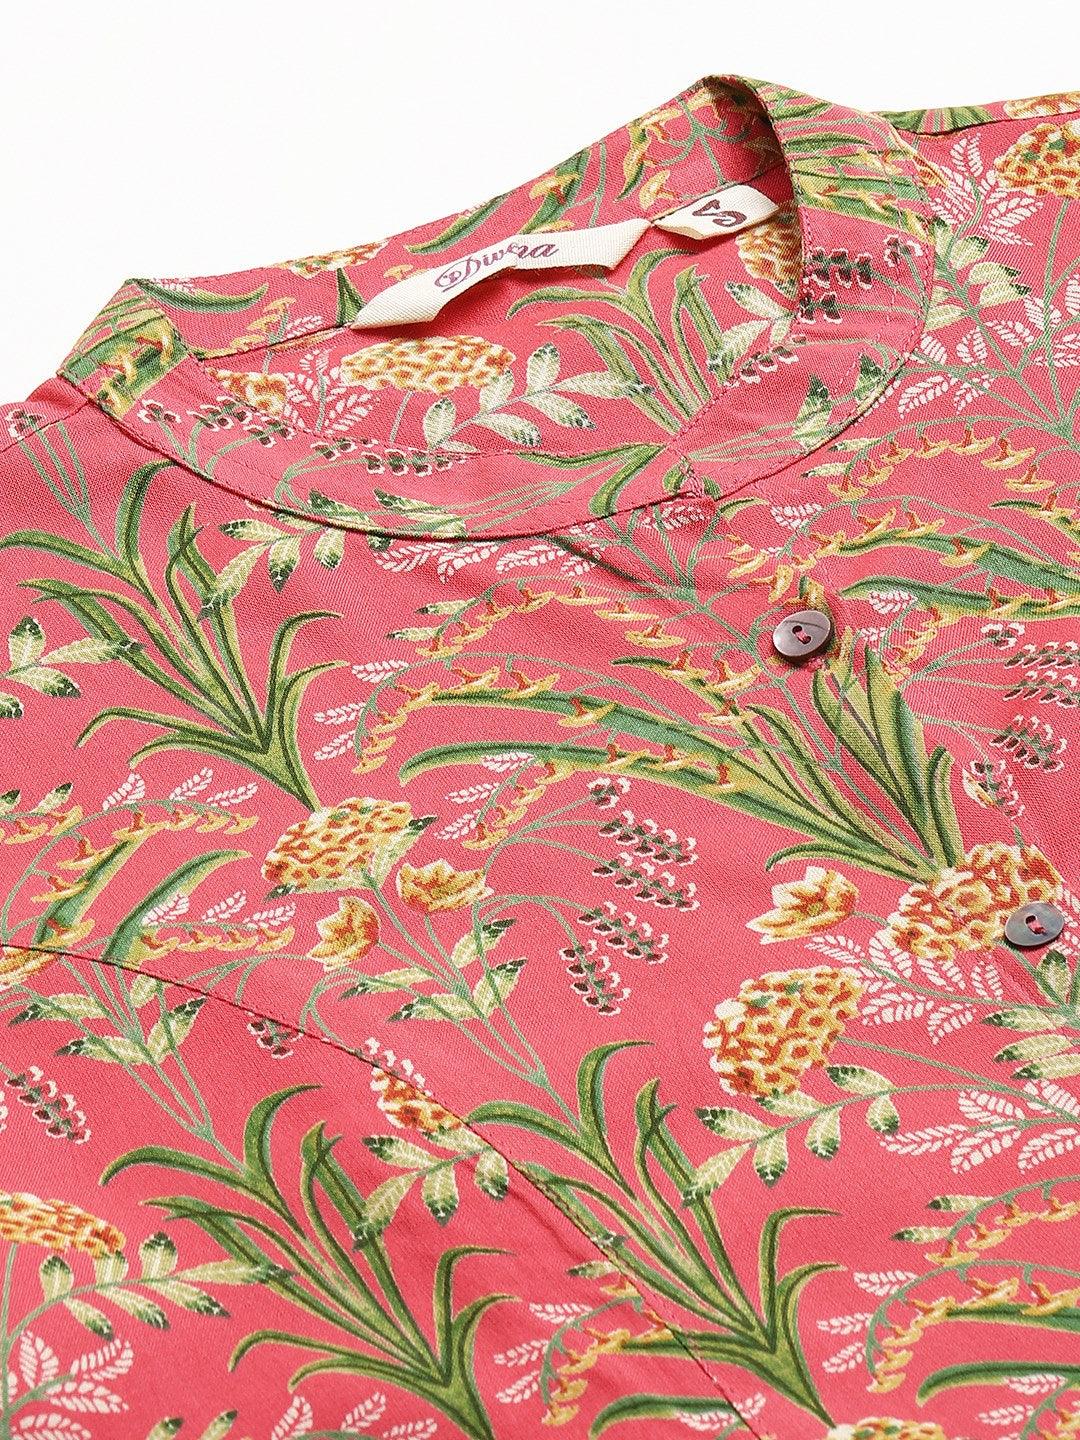 Divena Dark Pink Floral Rayon A-line Shirts Style Top - divenaworld.com